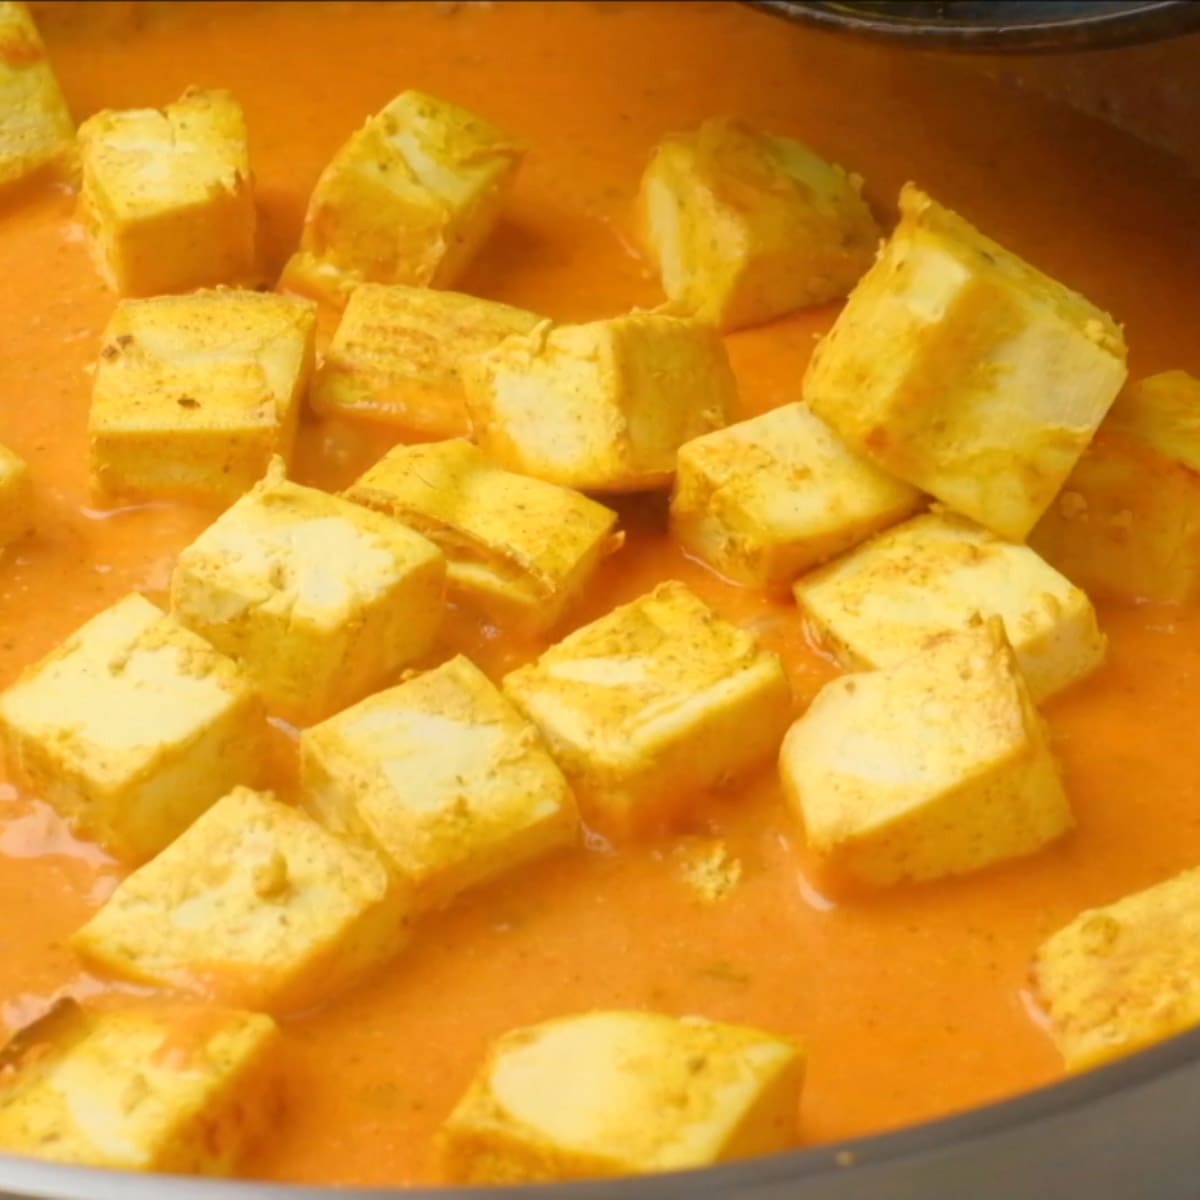 Add Tofu to the gravy